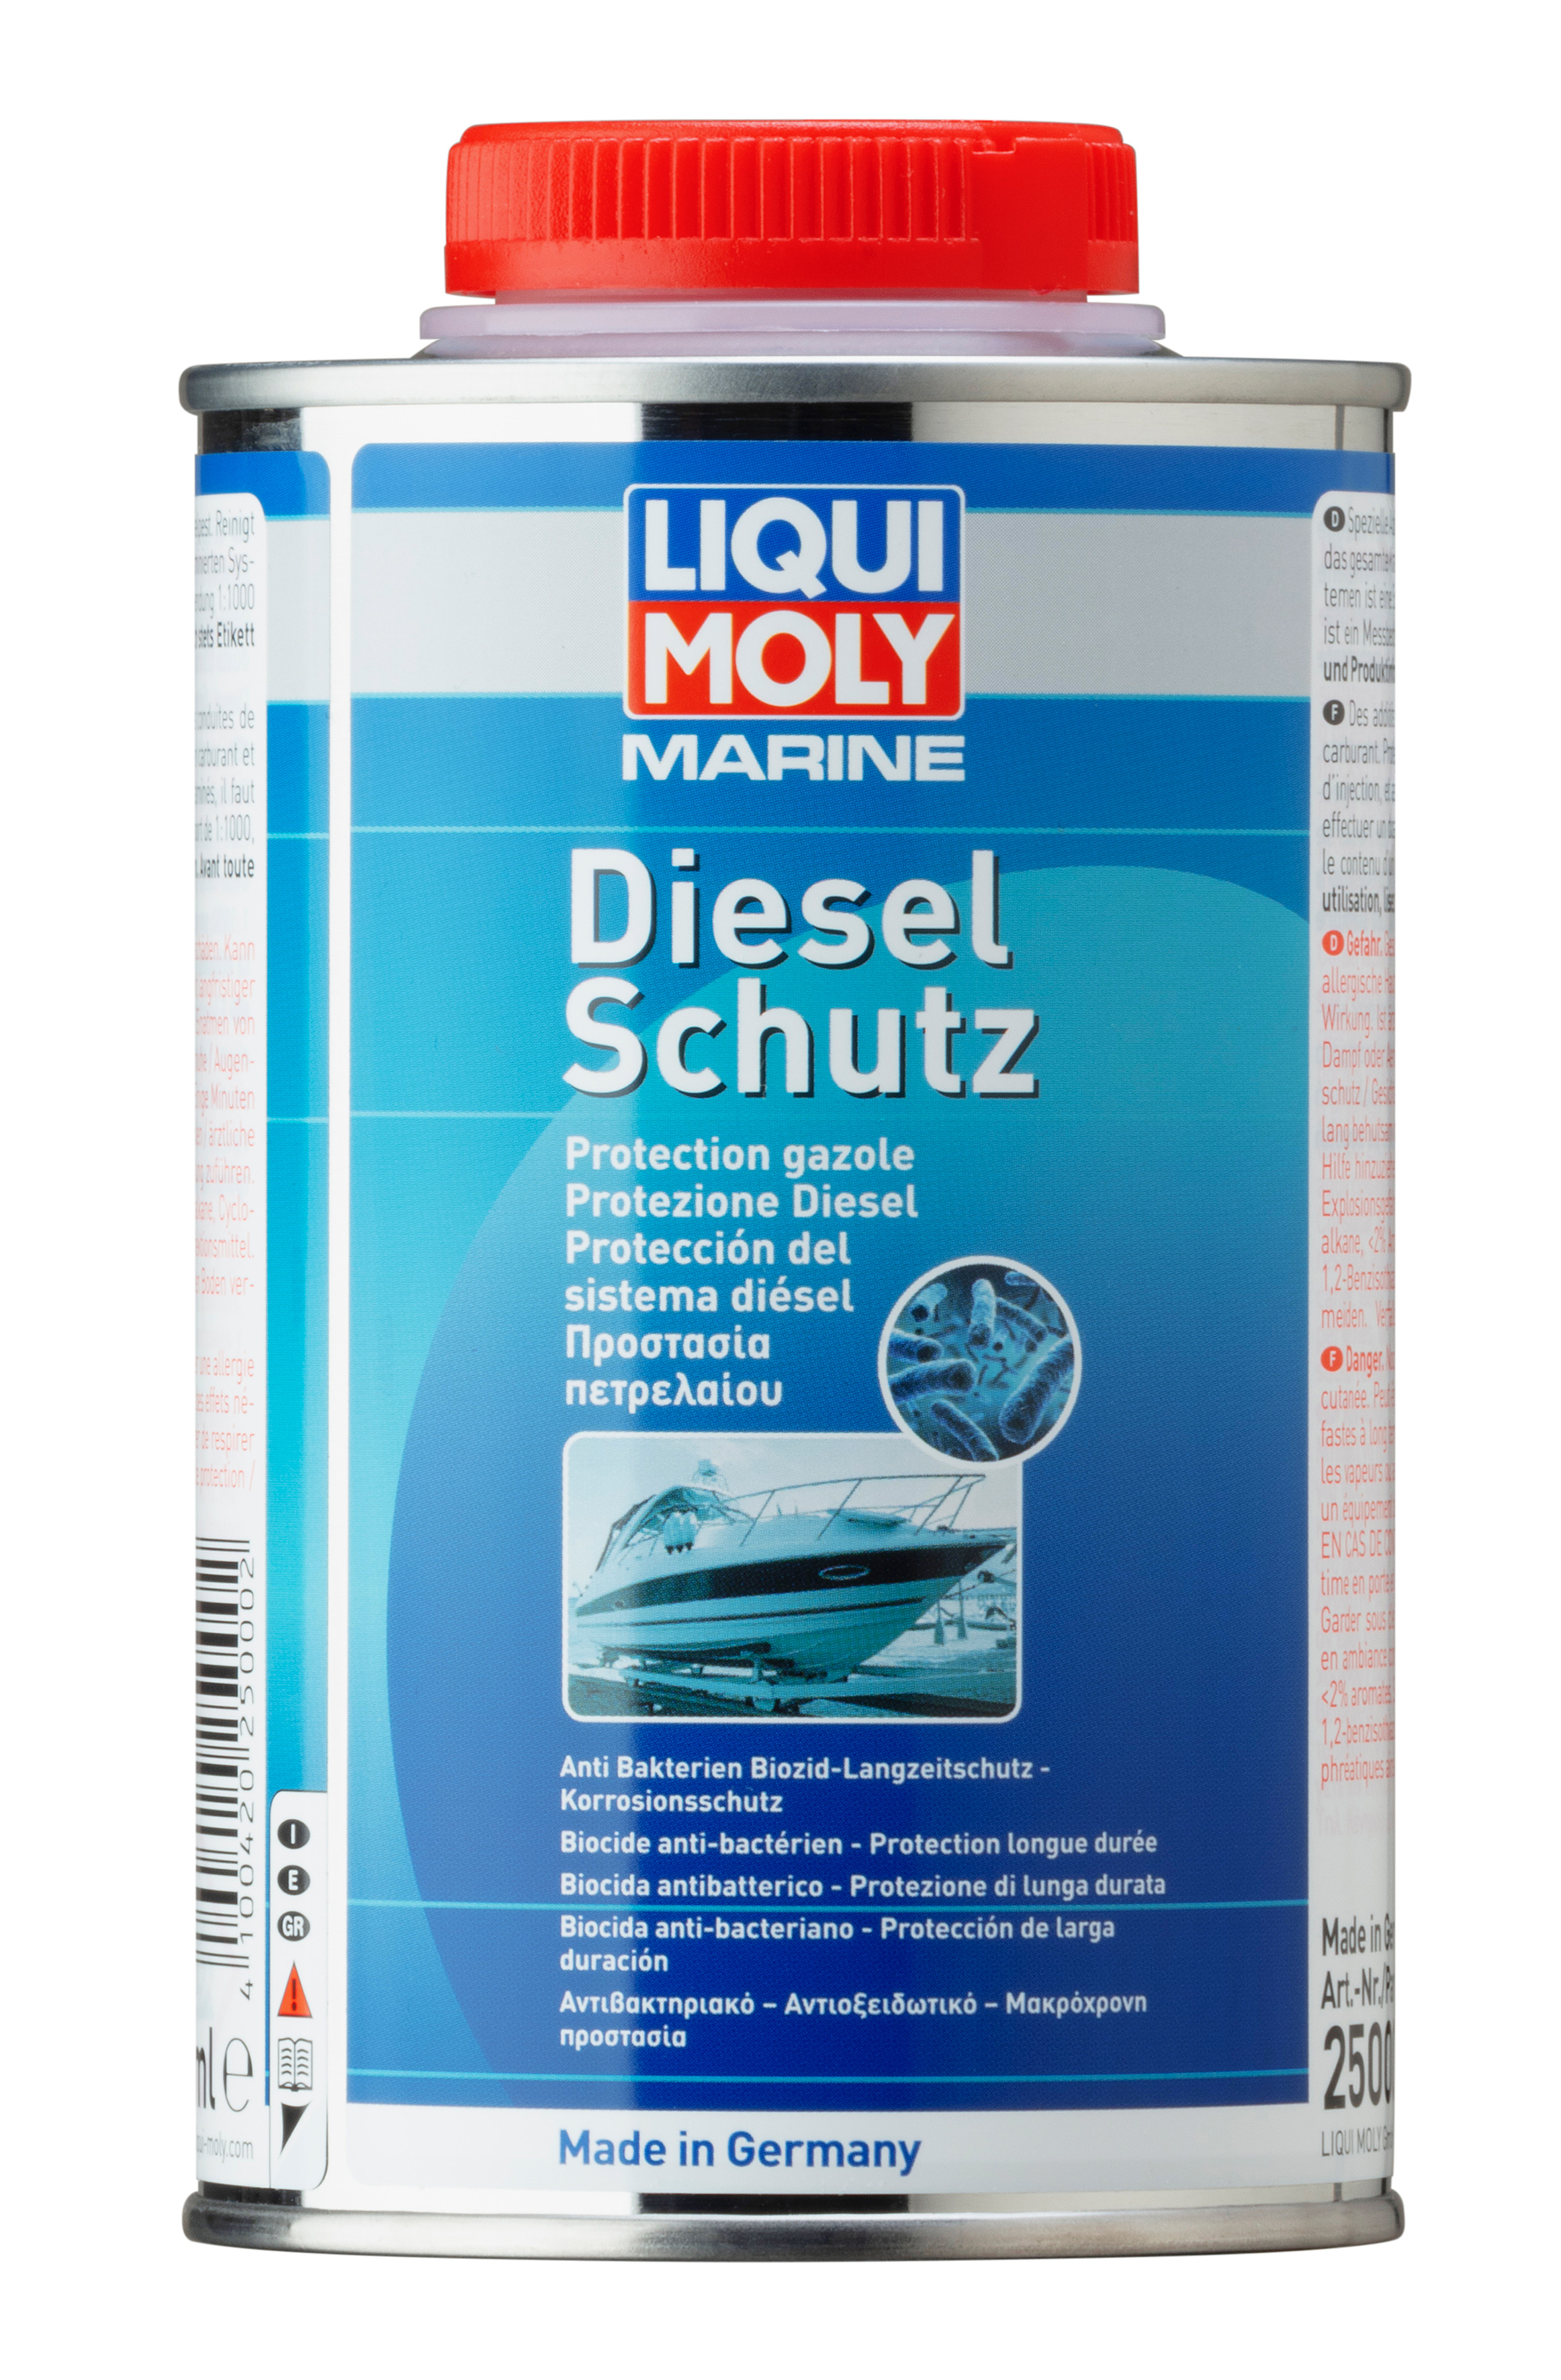 https://www.liqui-moly.com/fileadmin/user_upload/Presse/Pressemitteilungen_DE/2019/05/Marine_Diesel_Schutz.jpg